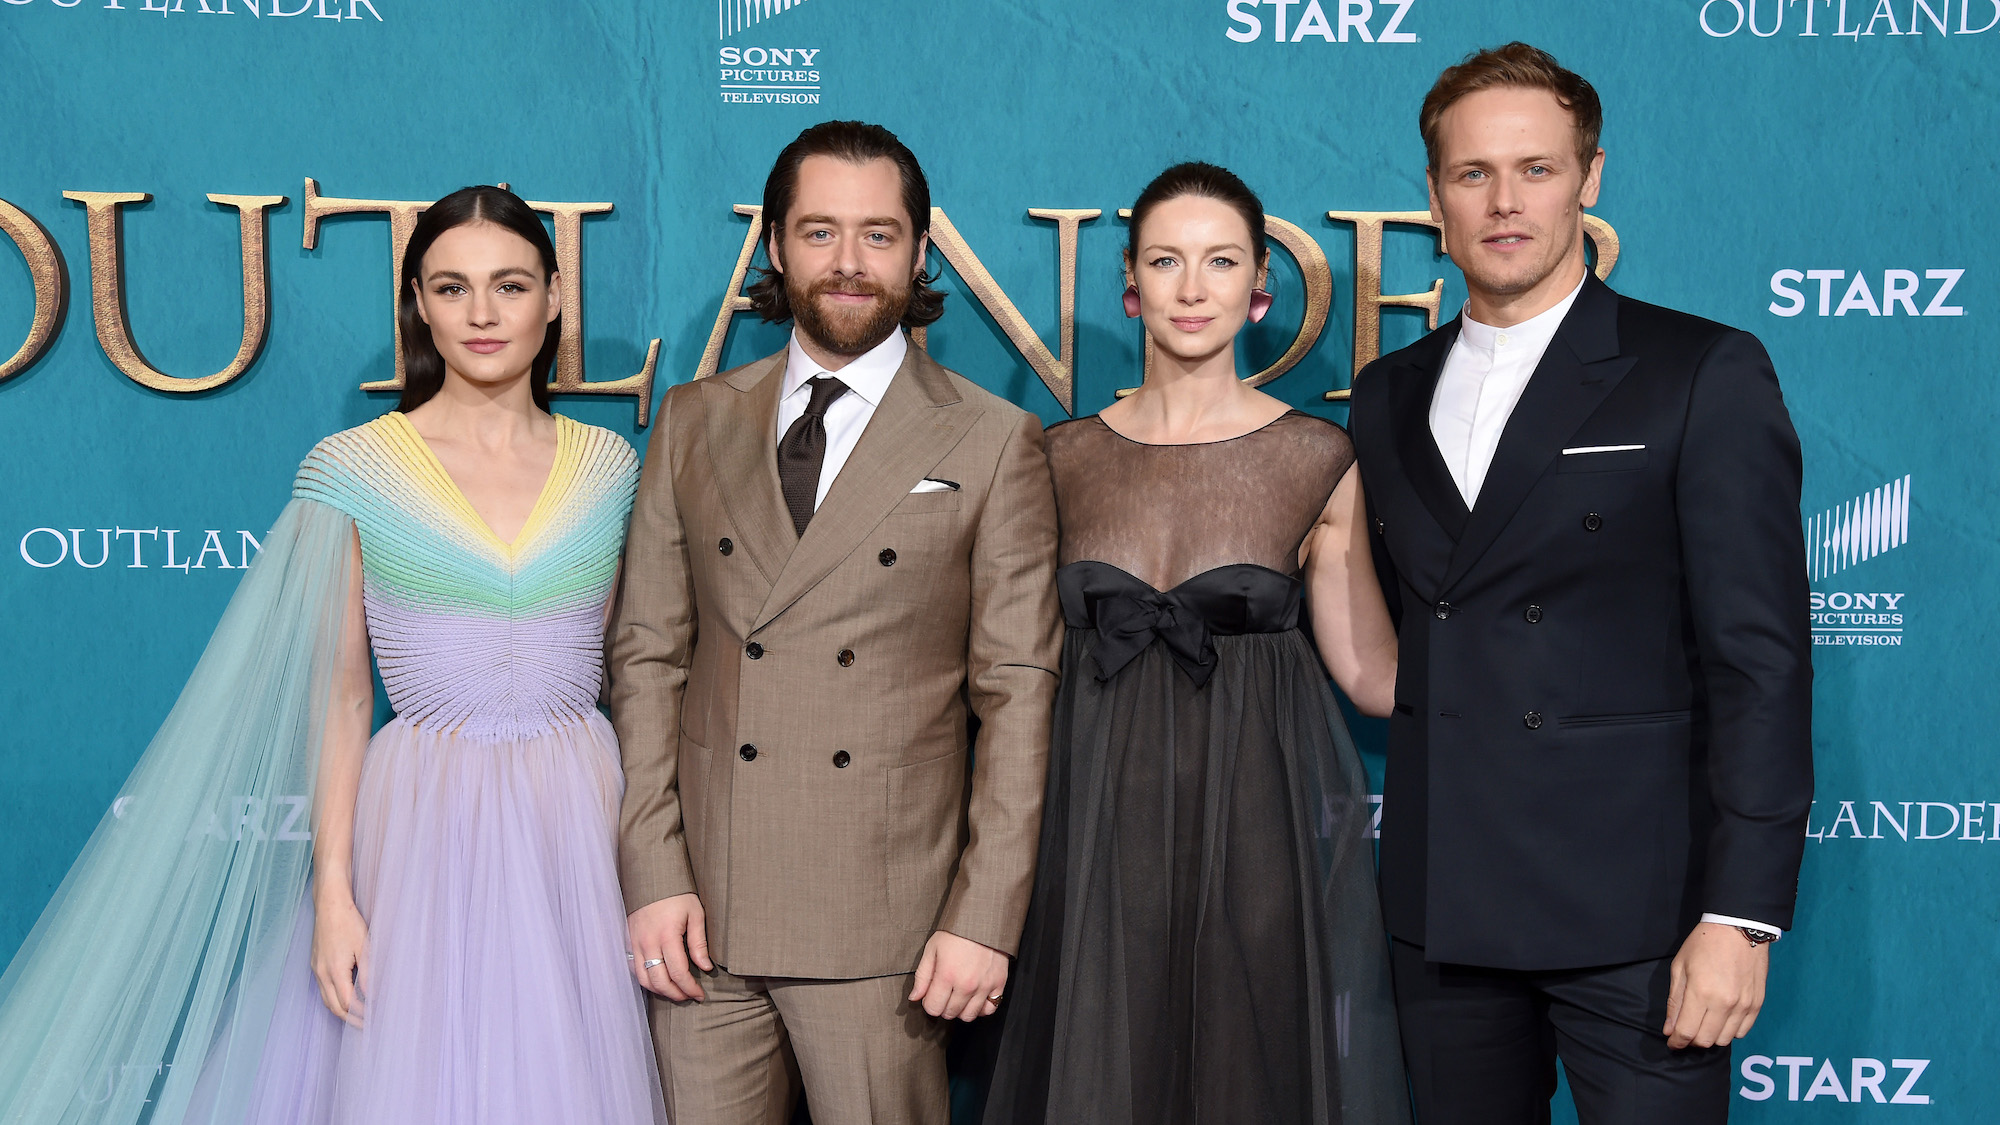 'Outlander' stars Sophie Skelton, Richard Rankin, Caitriona Balfe, and Sam Heughan smiling in front of a blue background in 2020